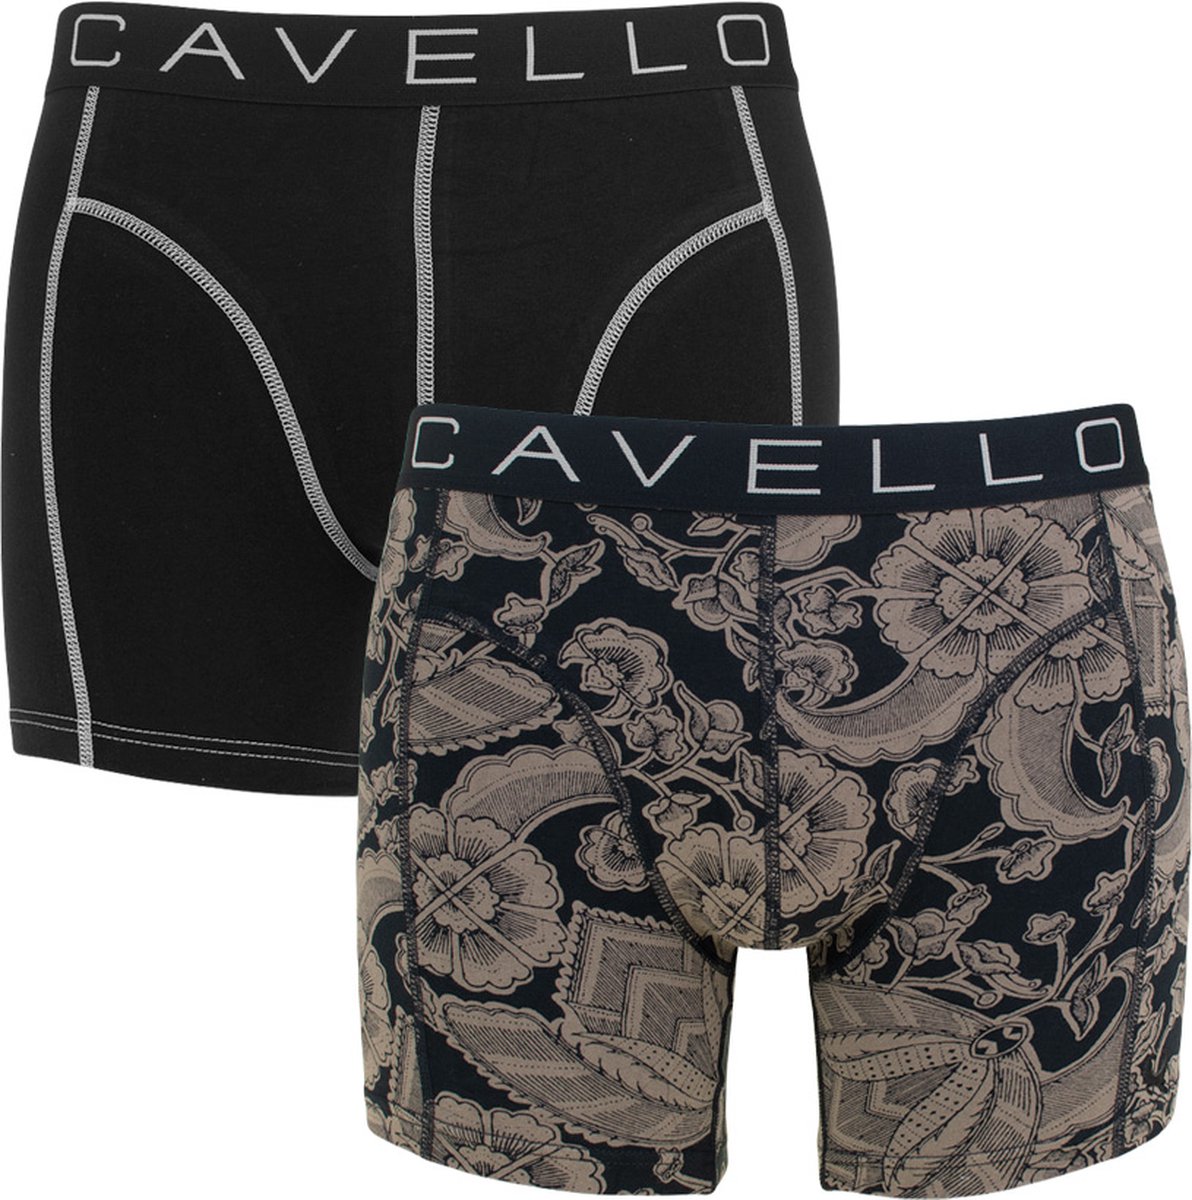 Cavello Boxershorts zwart print